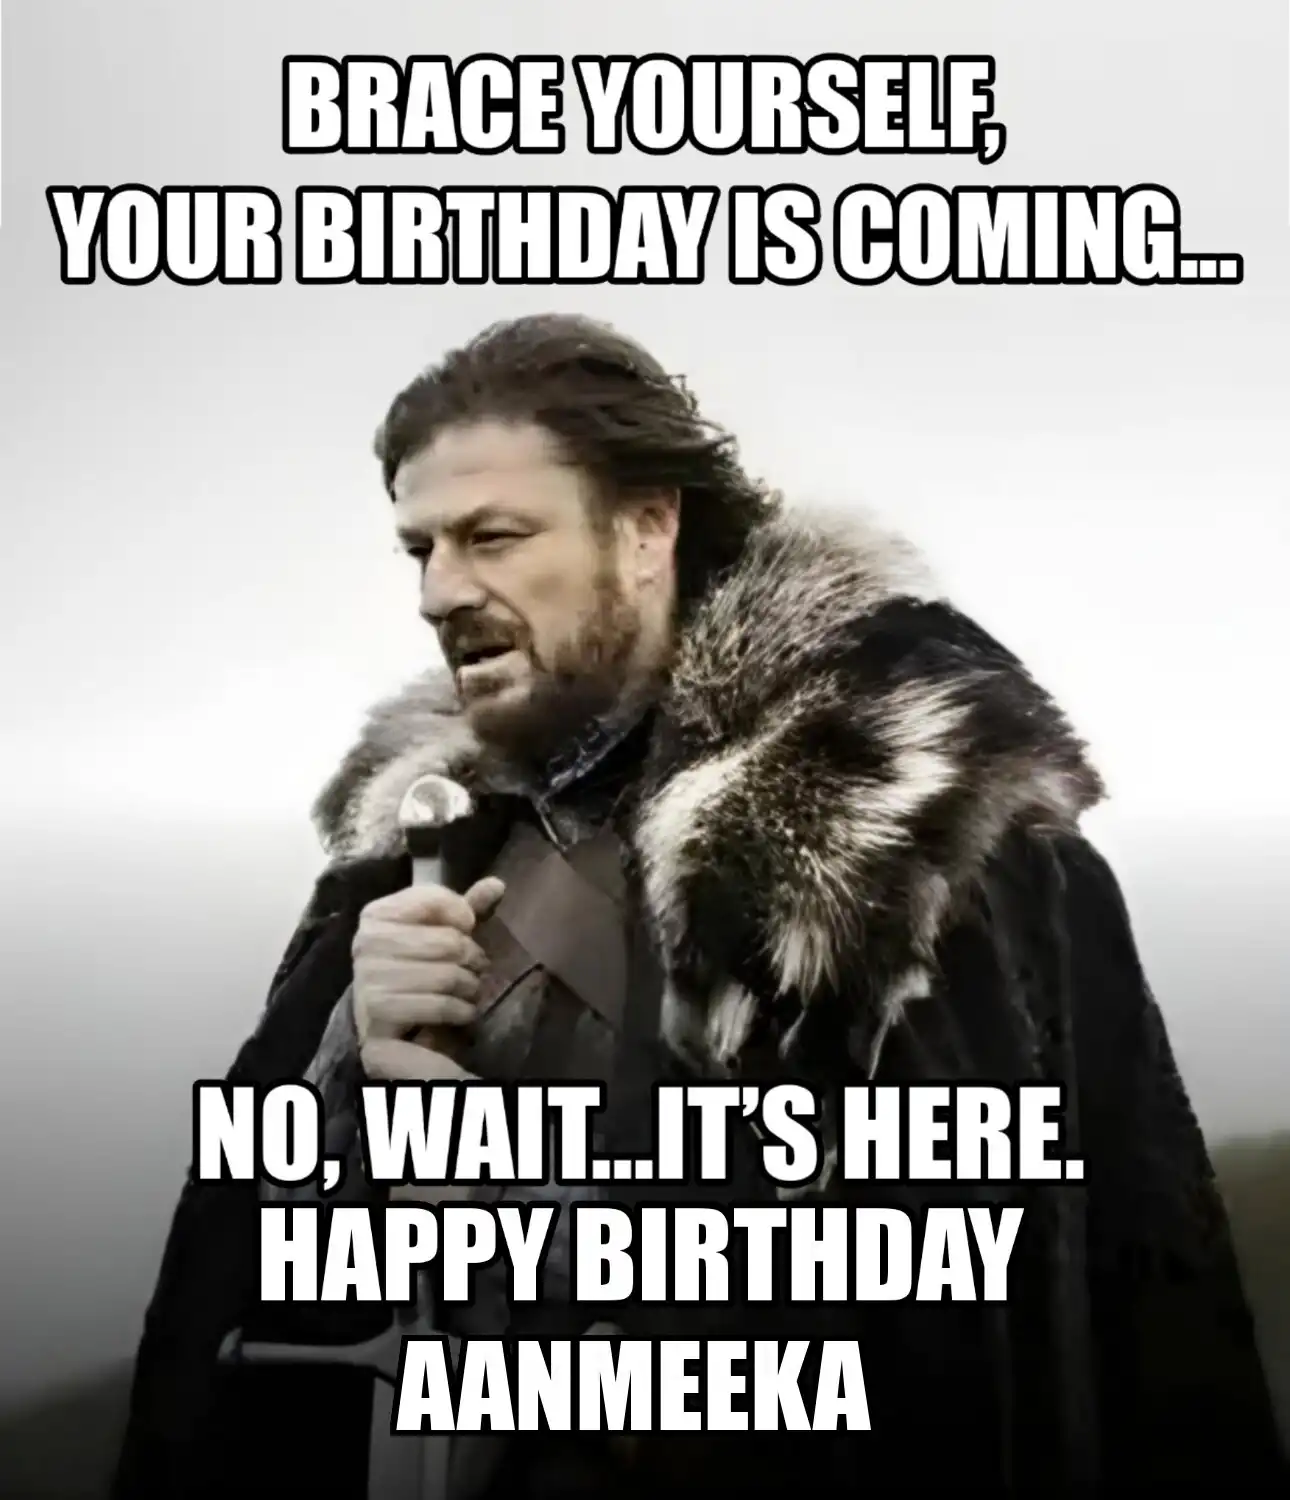 Happy Birthday Aanmeeka Brace Yourself Your Birthday Is Coming Meme